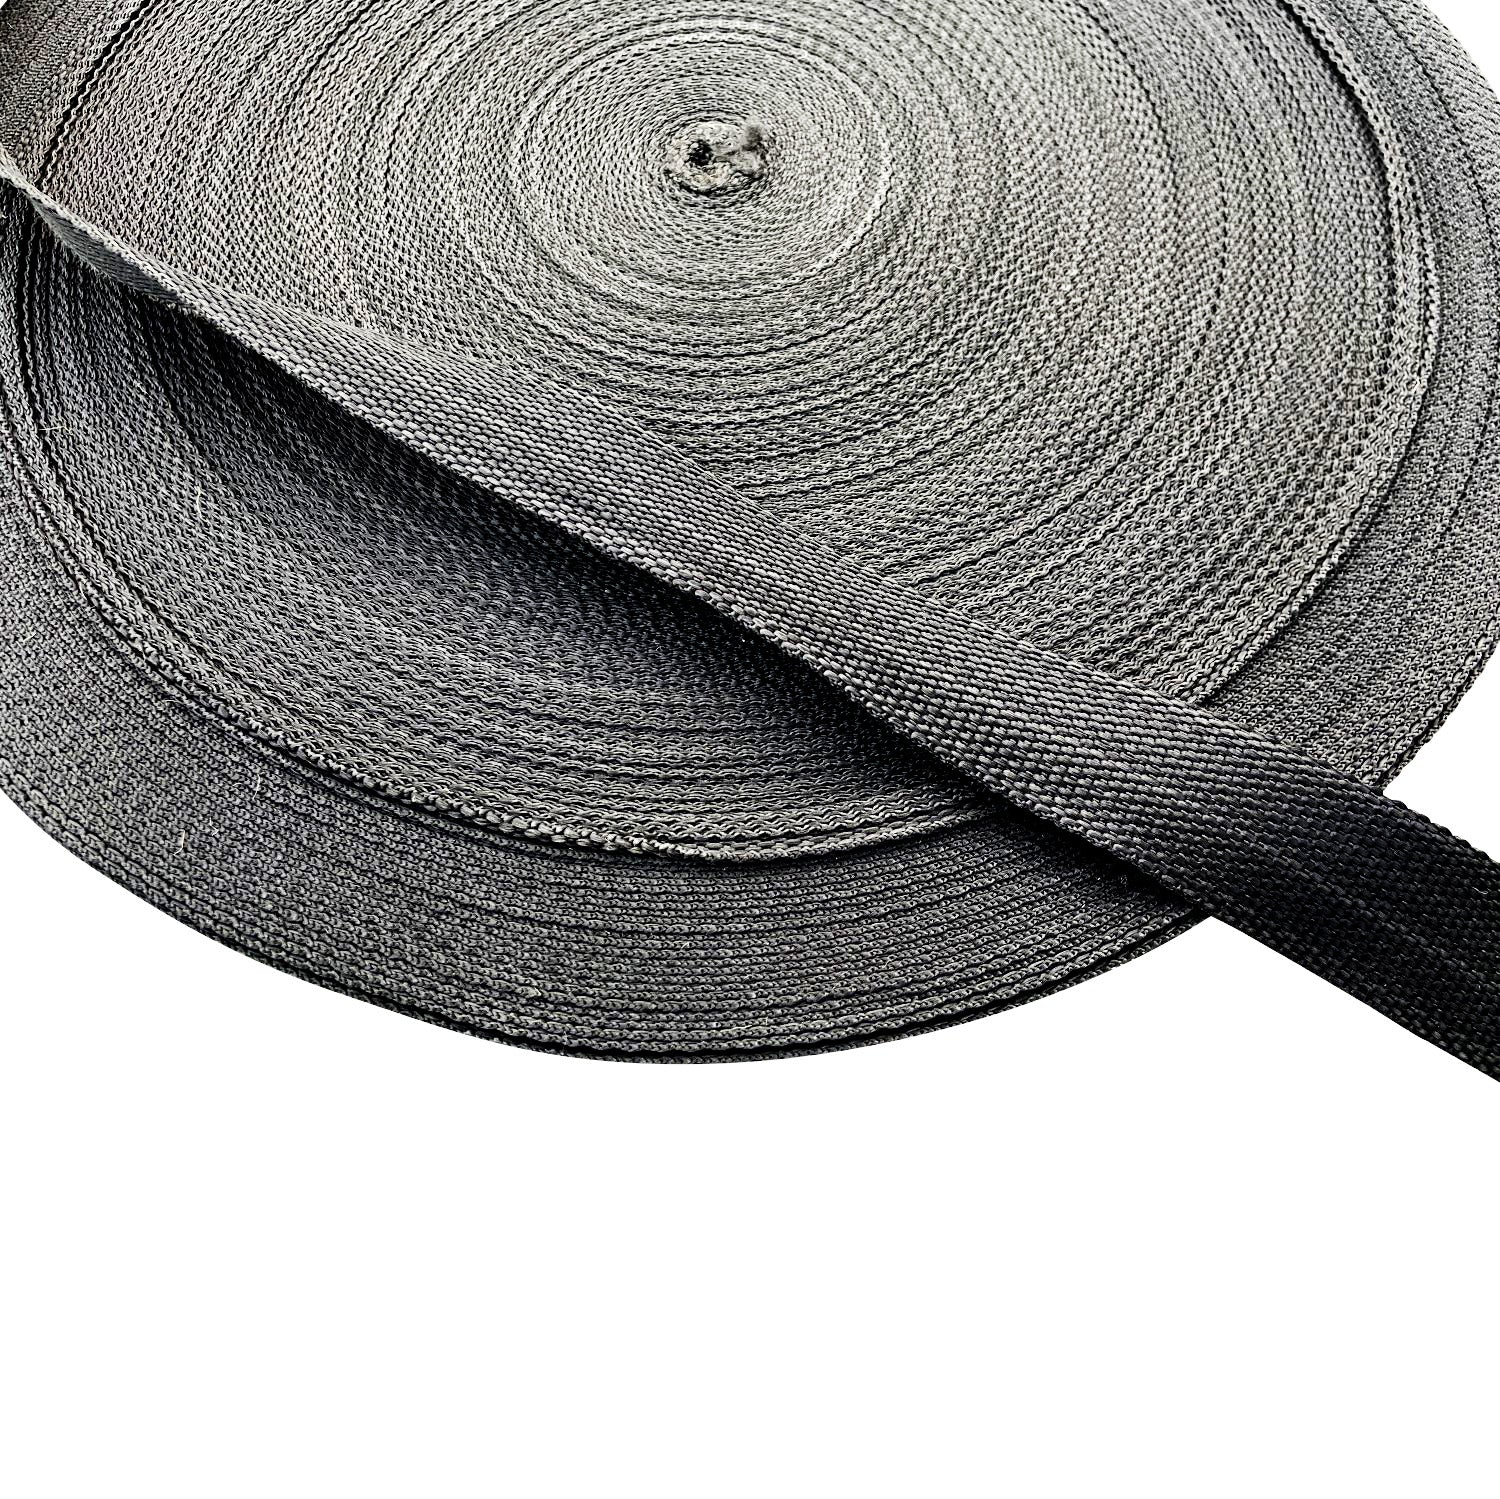 LIUSM 10 Yard Nylon Webbing Strap,Black Durable Flat Straps for